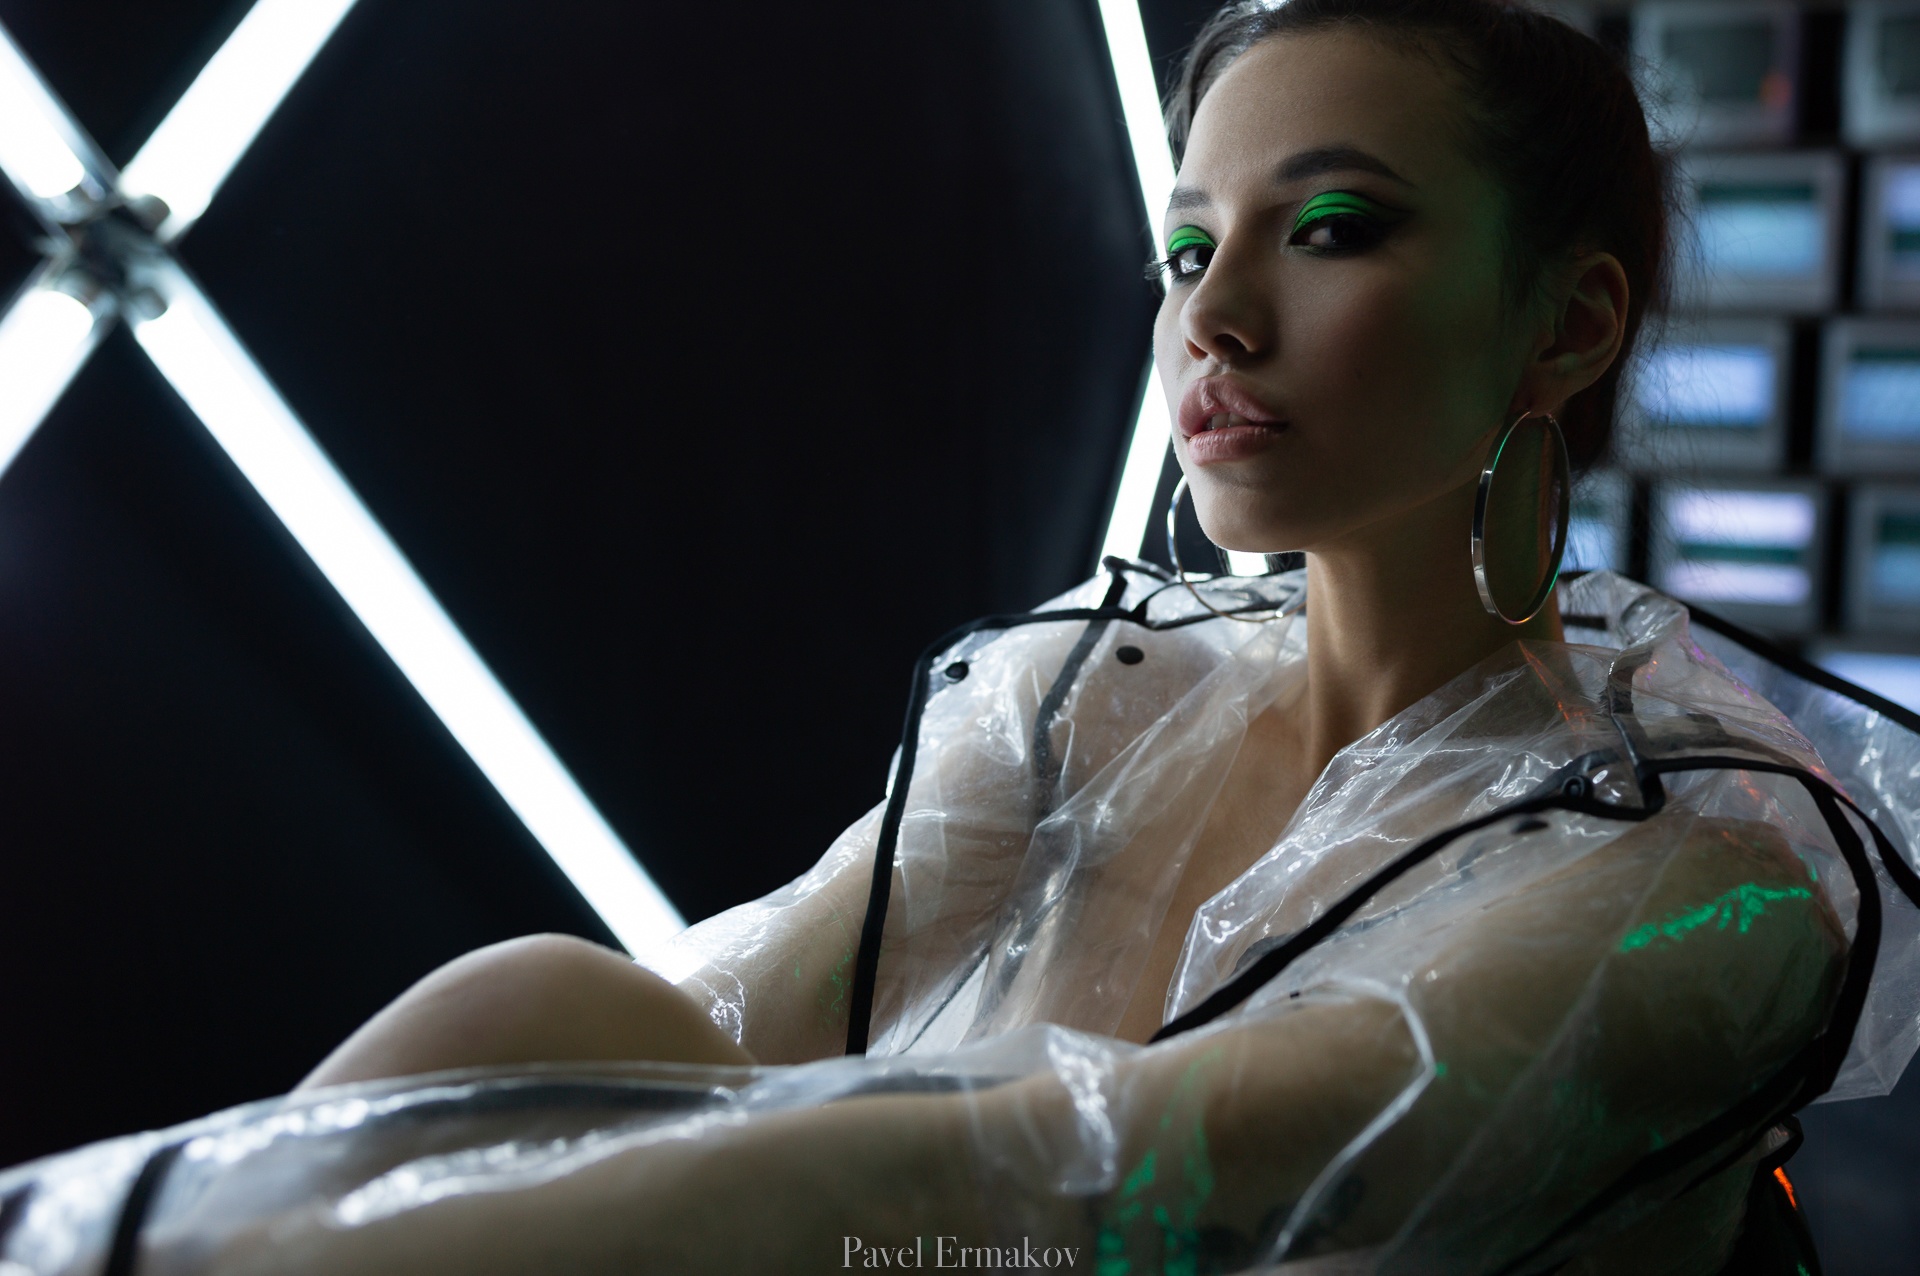 Pavel Ermakov Women Asian Makeup Robes Transparency Studio Neon Lights 1920x1276